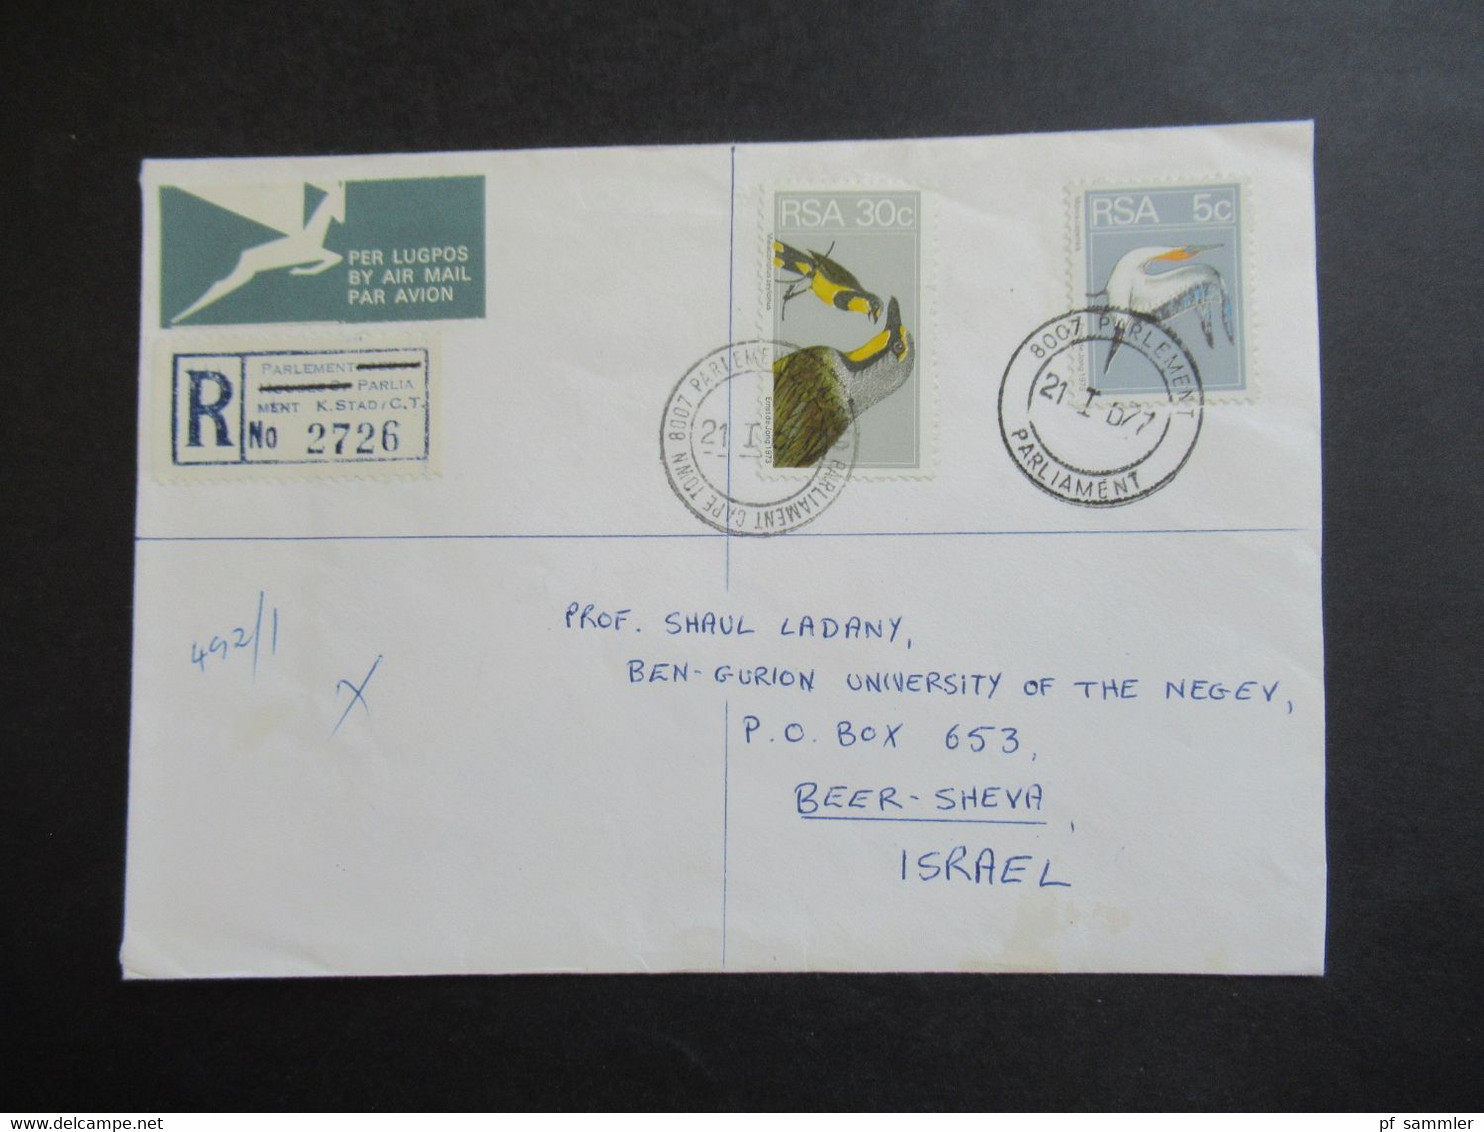 RSA / Süd - Afrika 1977 Air Mail Nach Israel R-Zettel Parlement Parliament K. Stad / Cape Town Volksraad Kaapstad - Briefe U. Dokumente